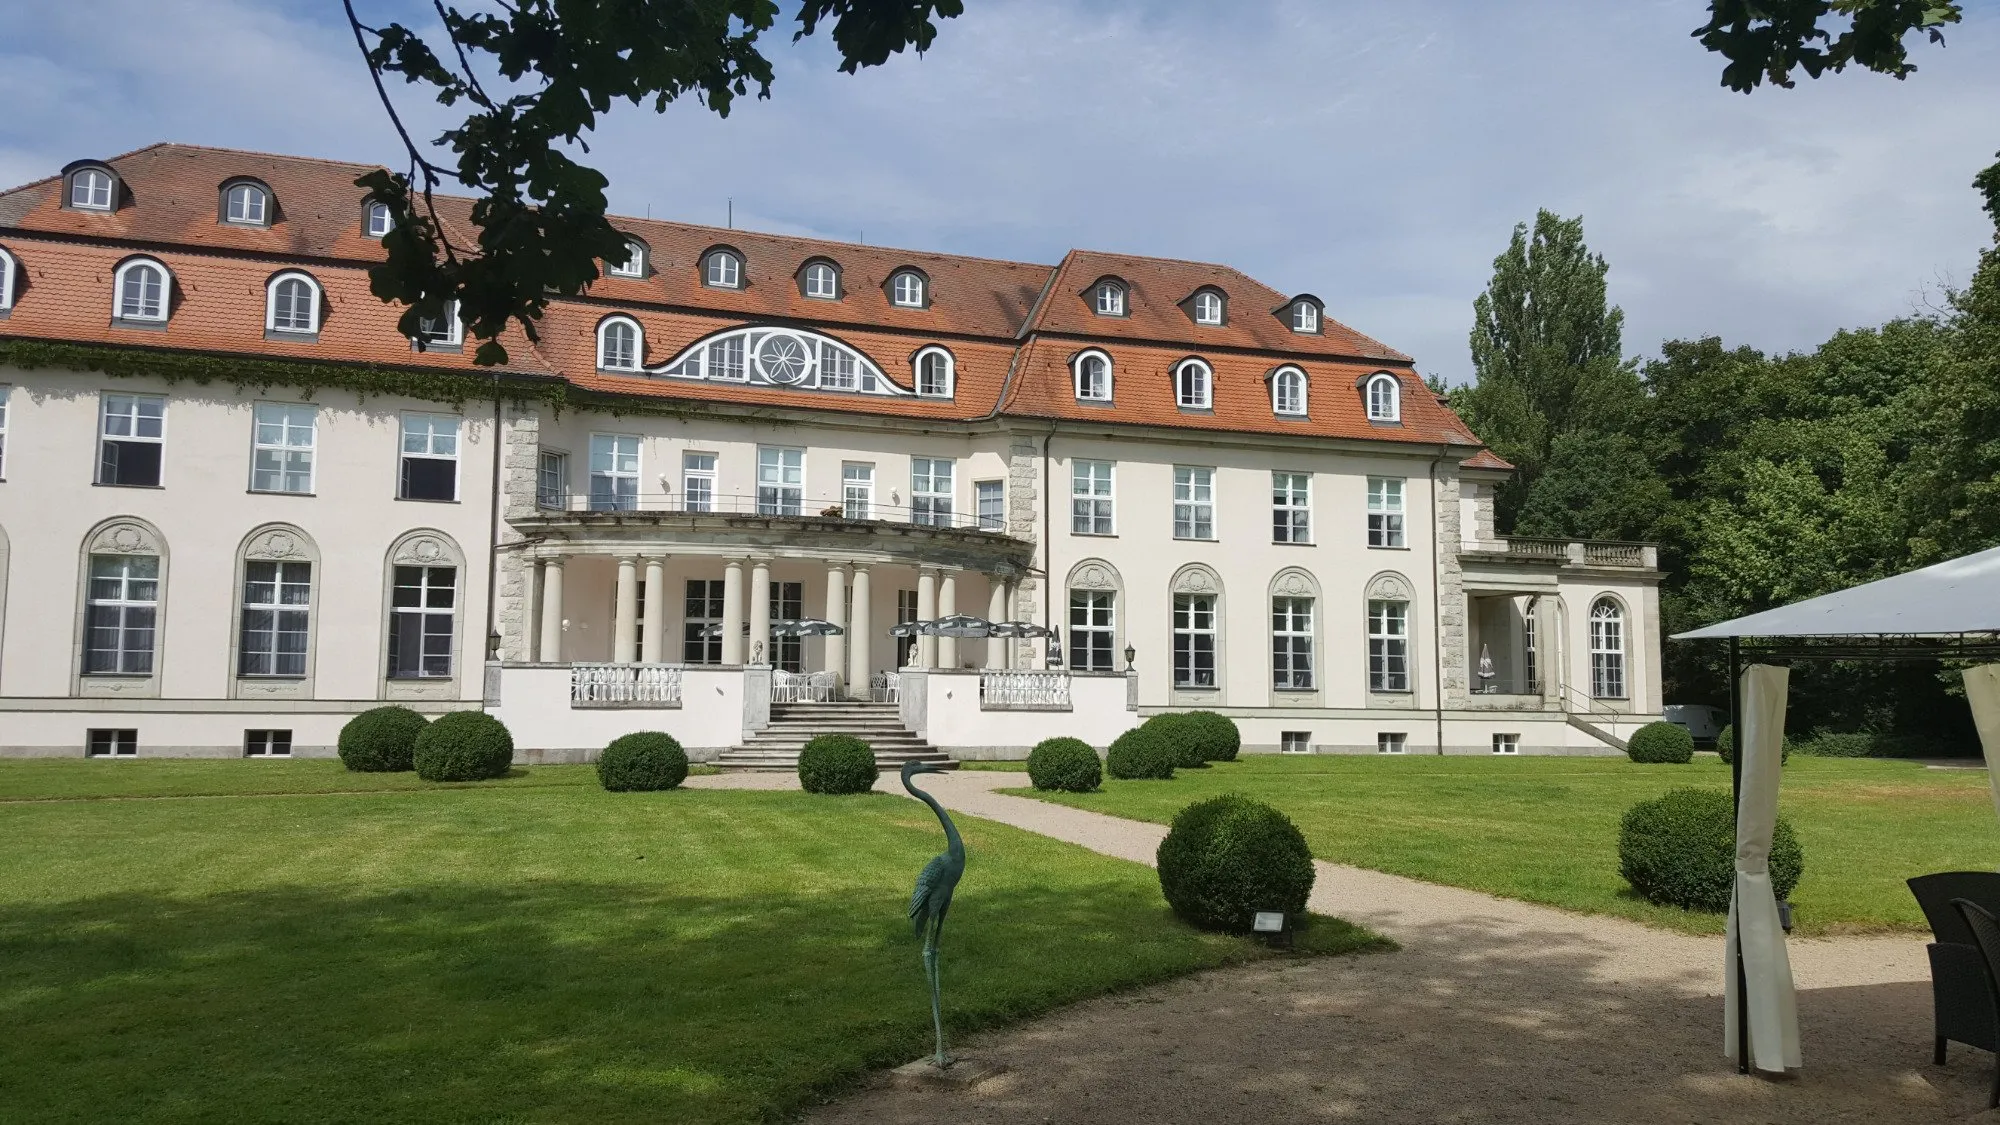 Building hotel Hotel Schloss Storkau